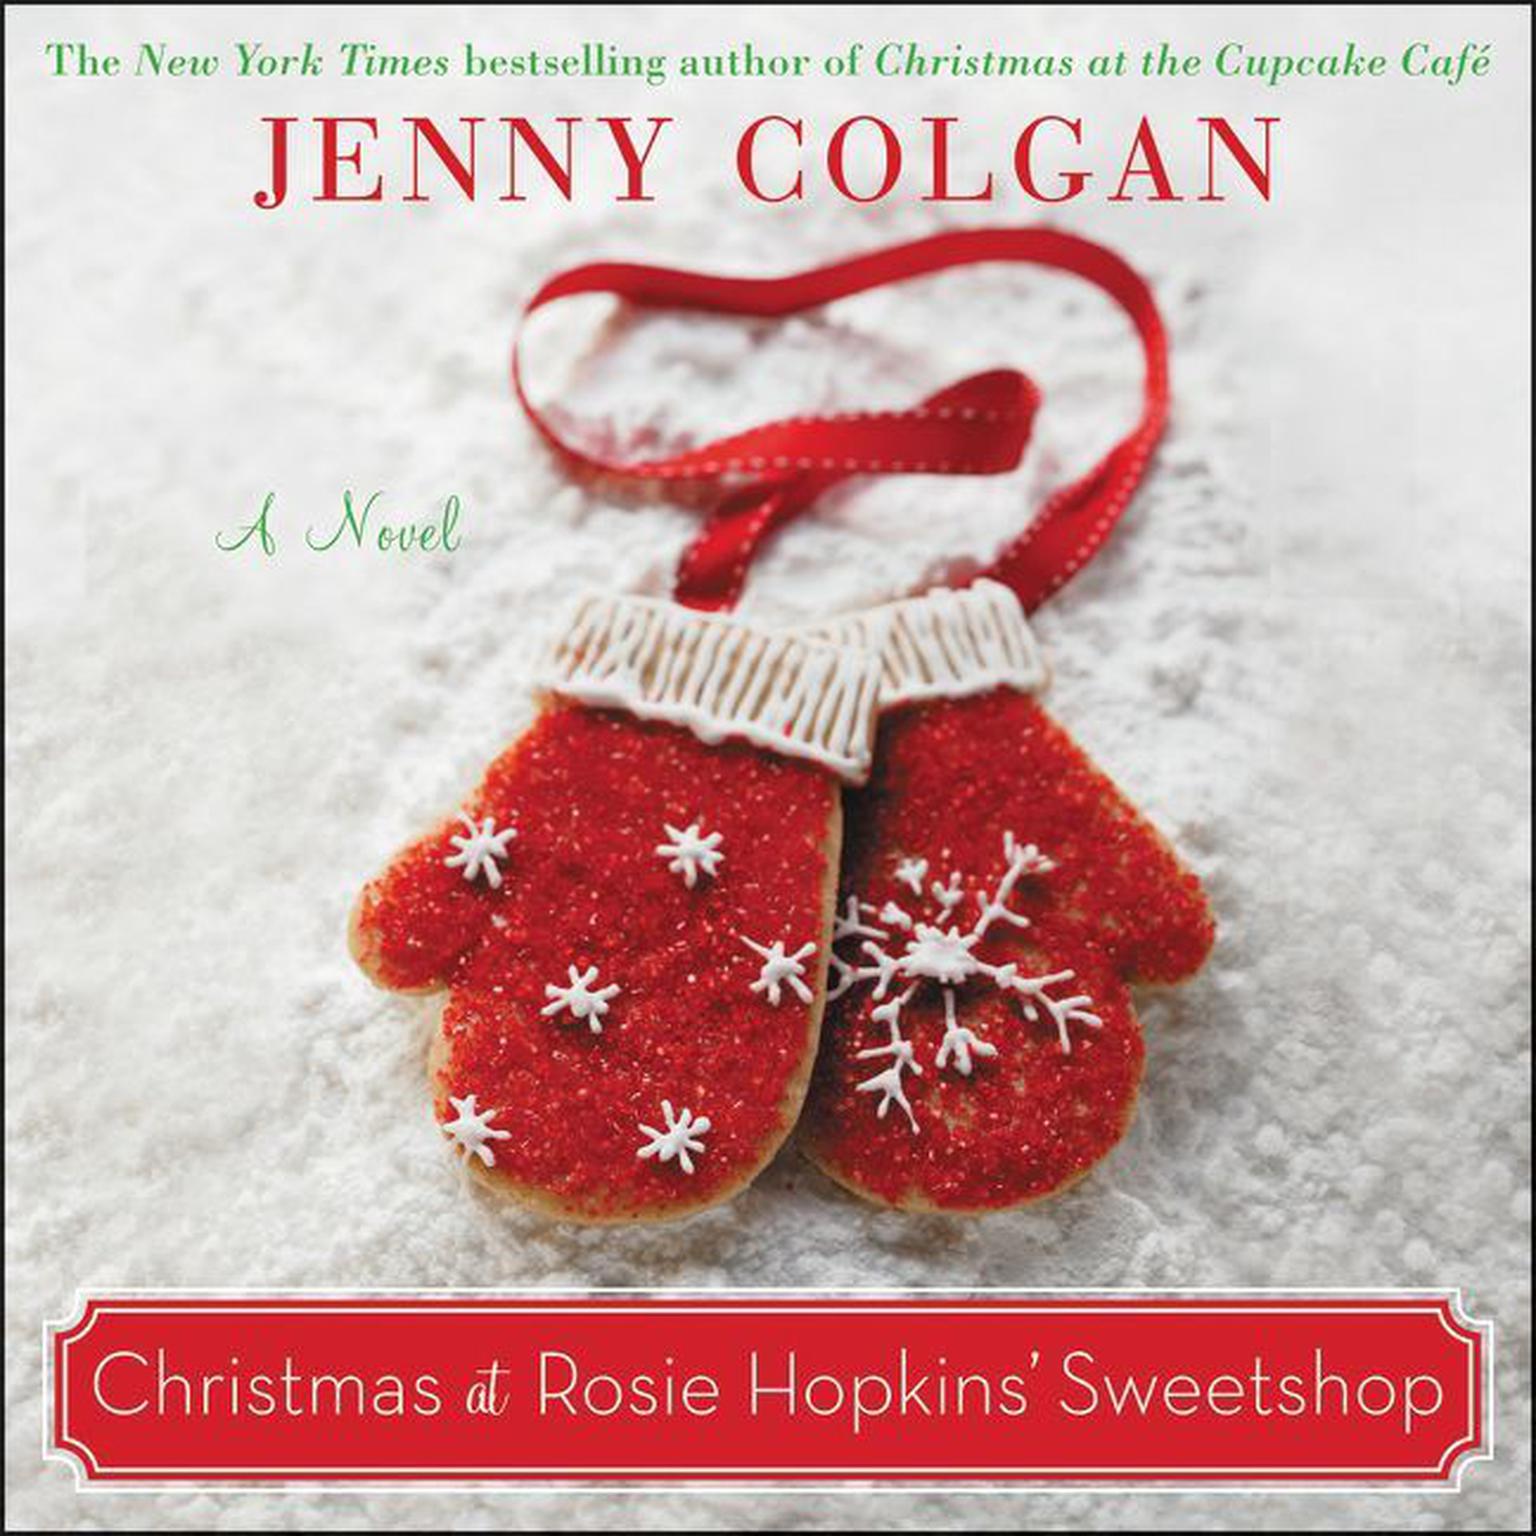 Christmas at Rosie Hopkins Sweetshop: A Novel Audiobook, by Jenny Colgan